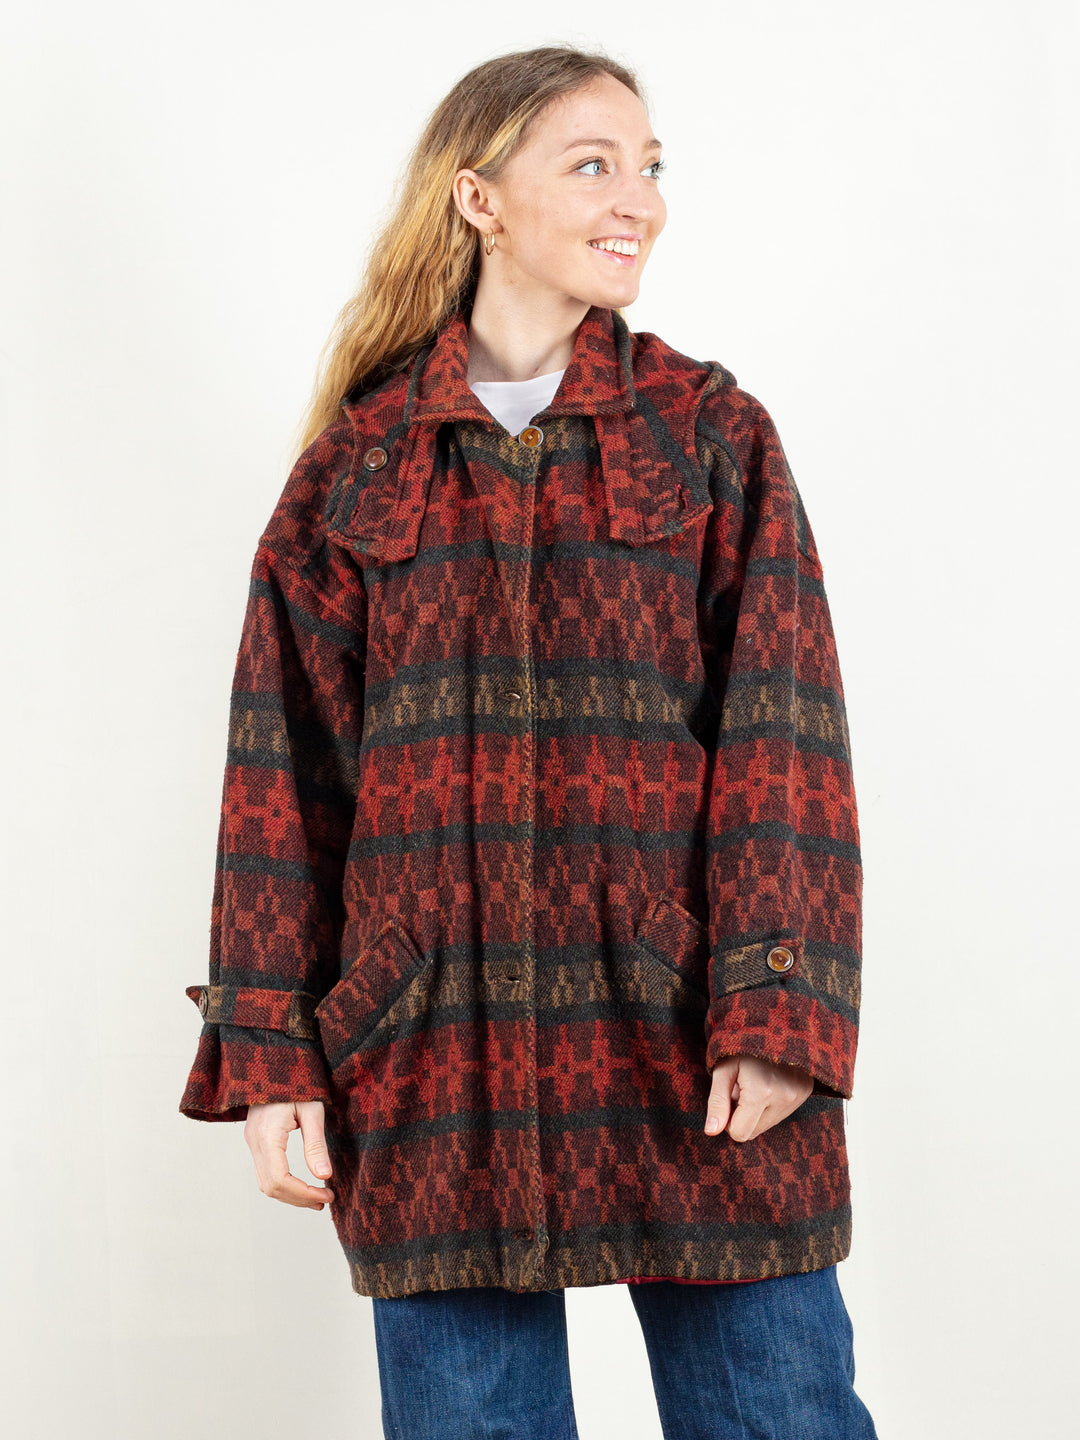 Aztec Pattern Coat wool blend 80s hooded blanket coat button up oversized wool jacket boho outerwear 80s vintage clothing size extra large